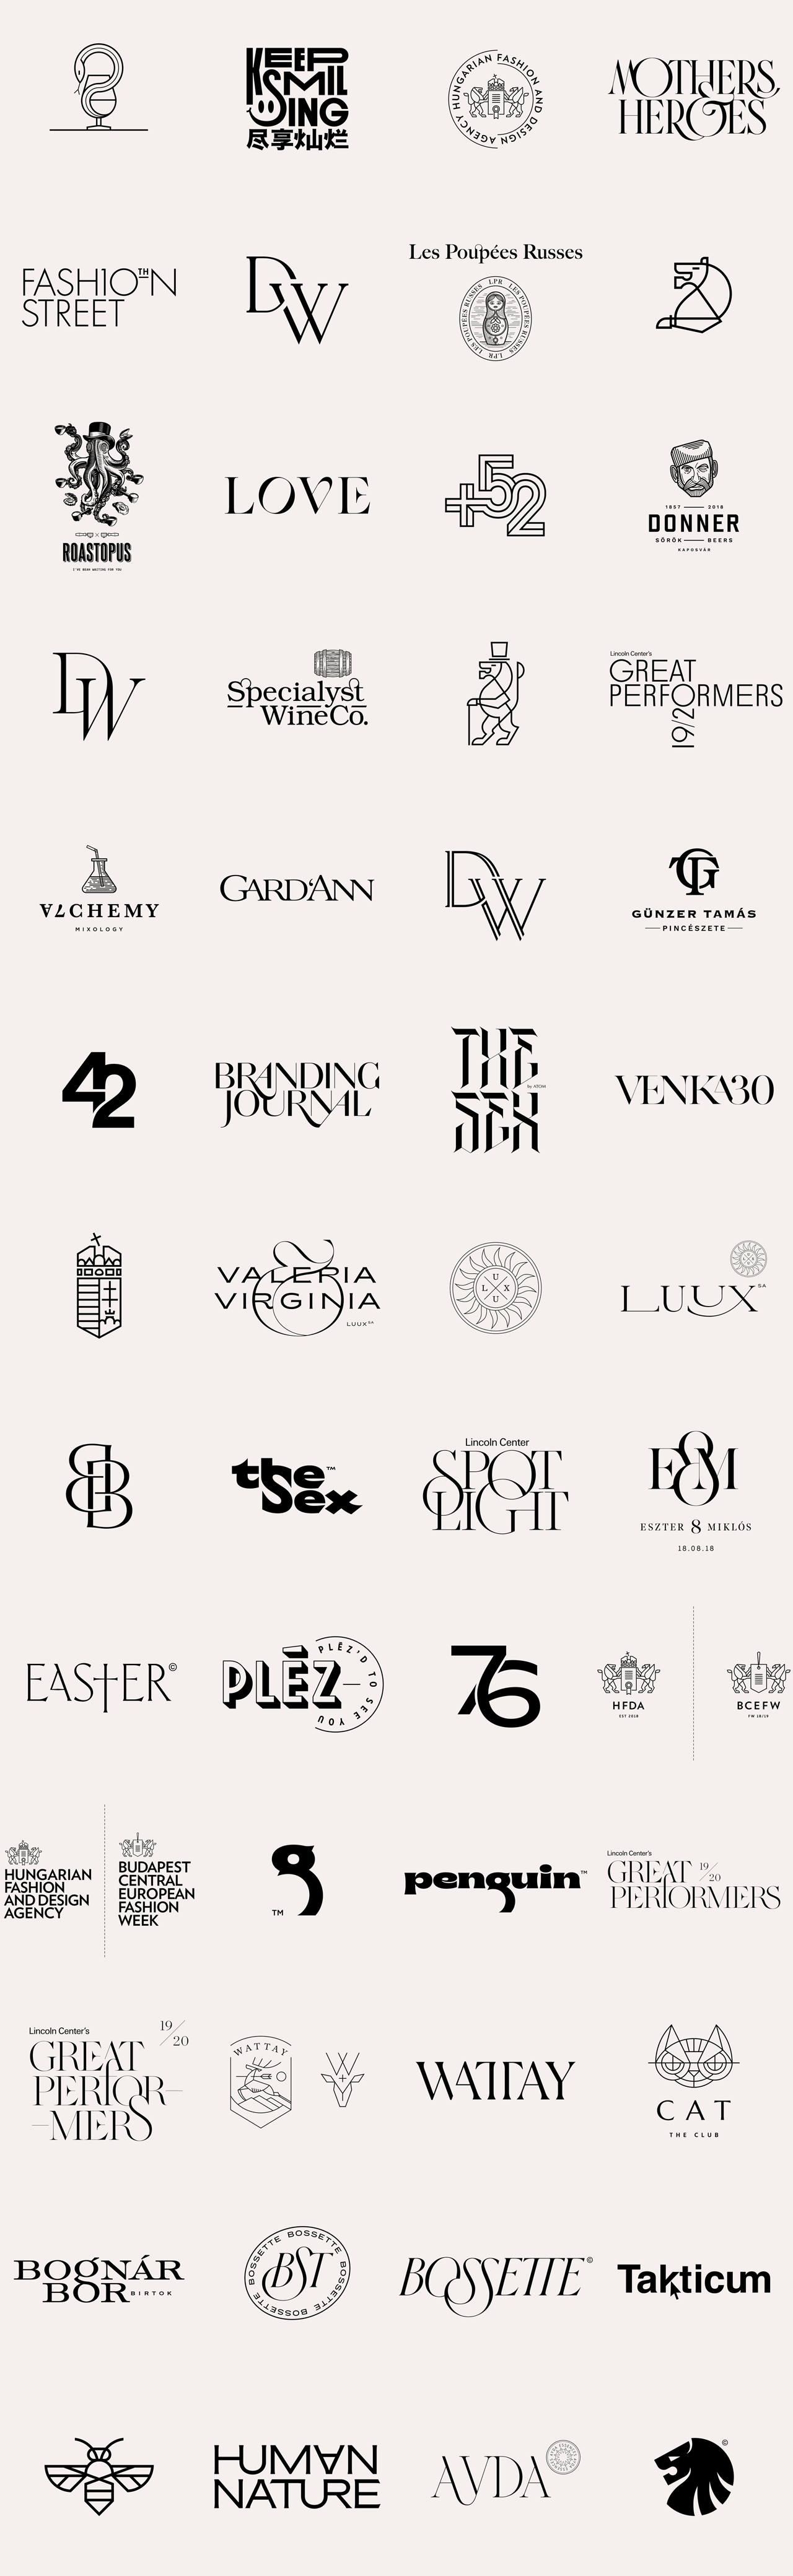 52 logos by graphic designer Miklós Kiss.